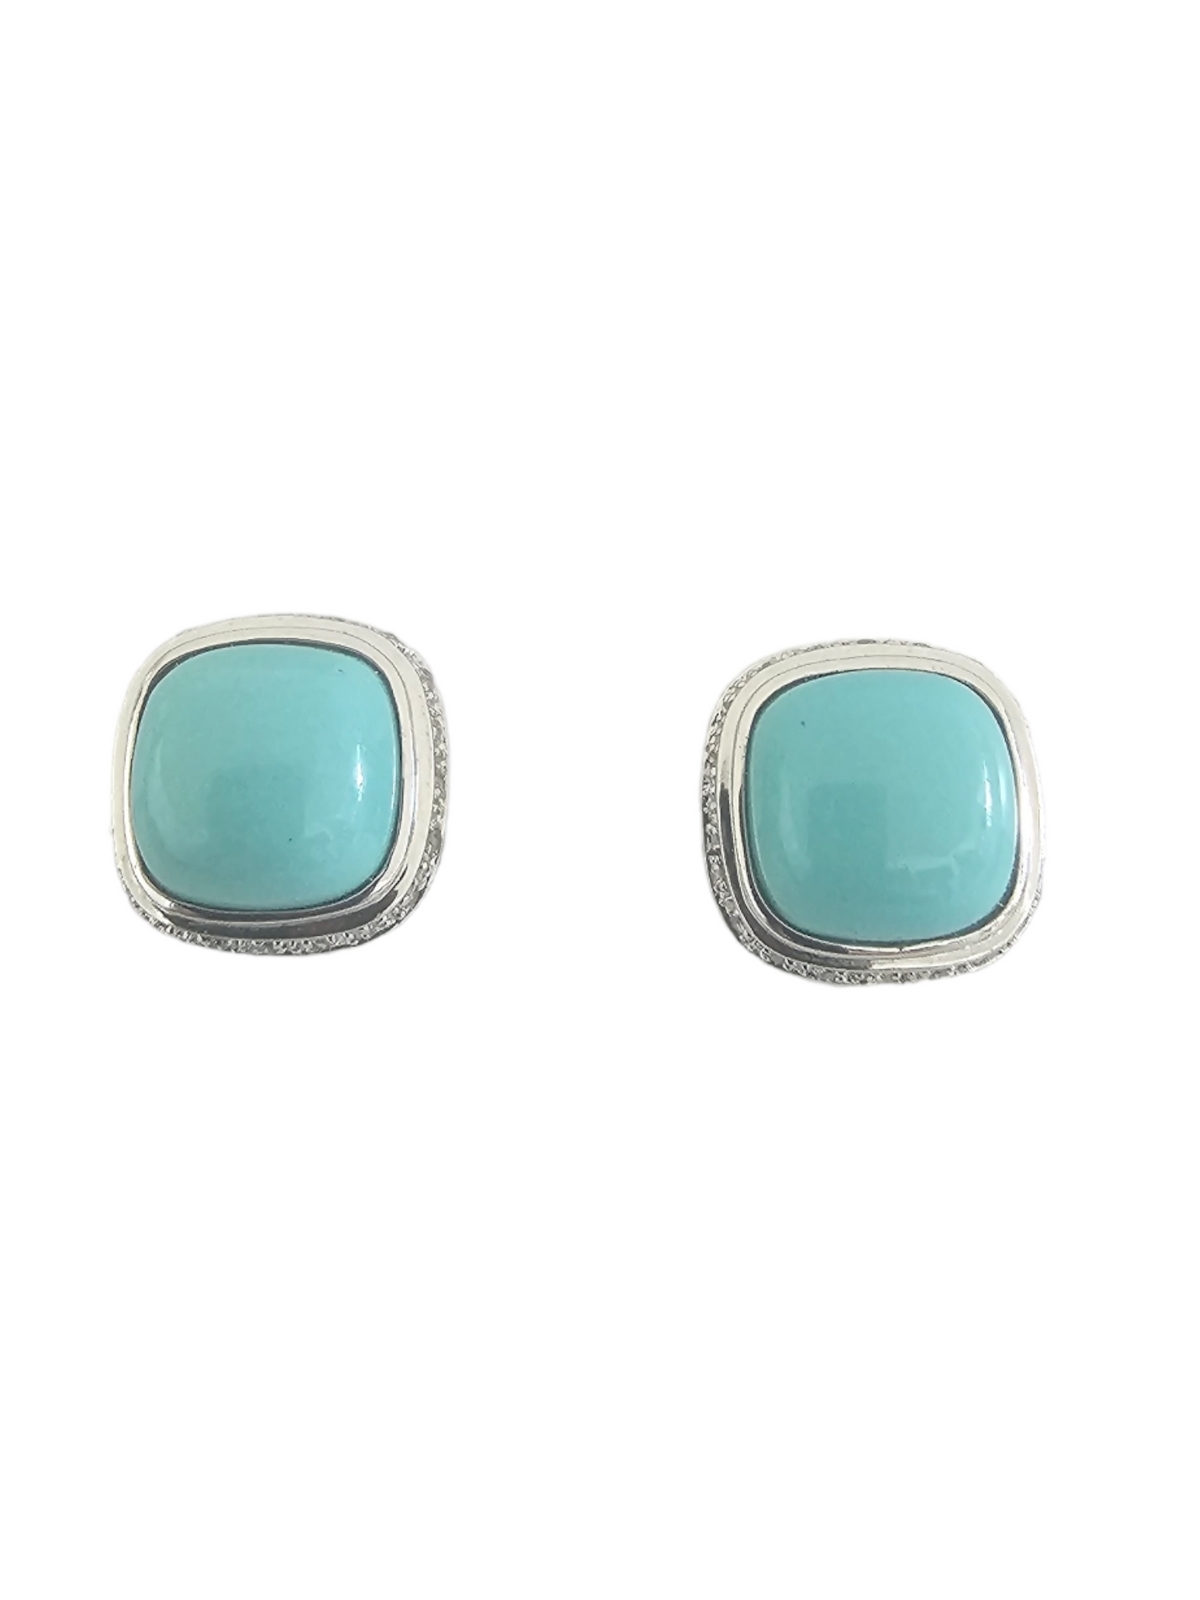 Sleeping Beauty Turquoise and Diamond Earrings, 14kt White Gold stud earrings